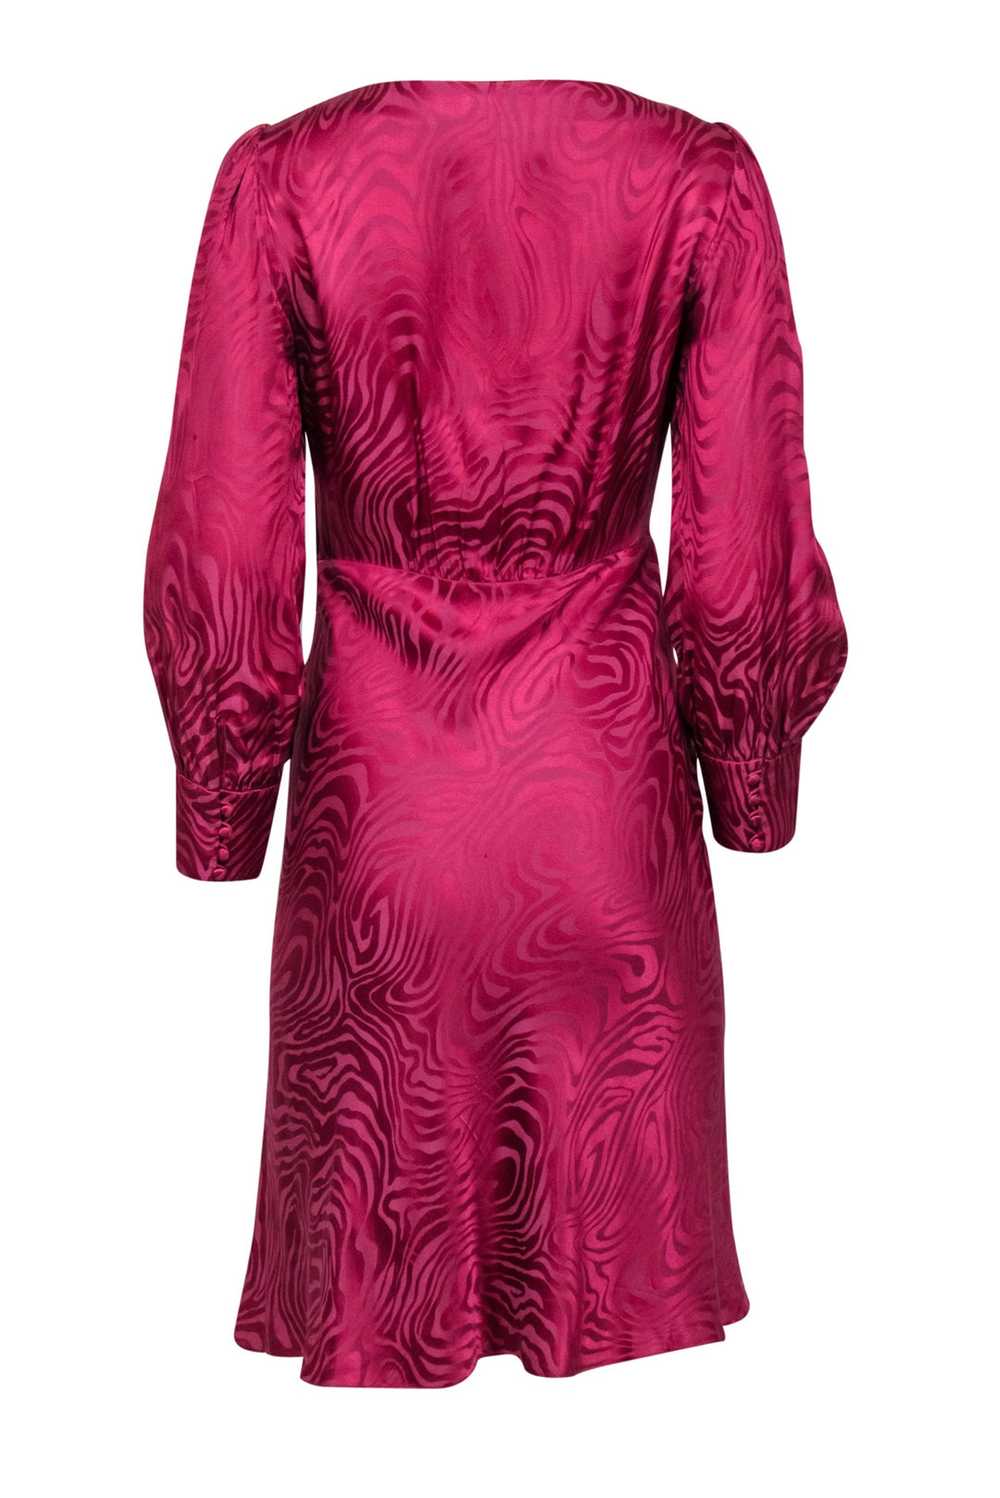 Rebecca Taylor - Pink Swirl Print Silk Blend A-Li… - image 3